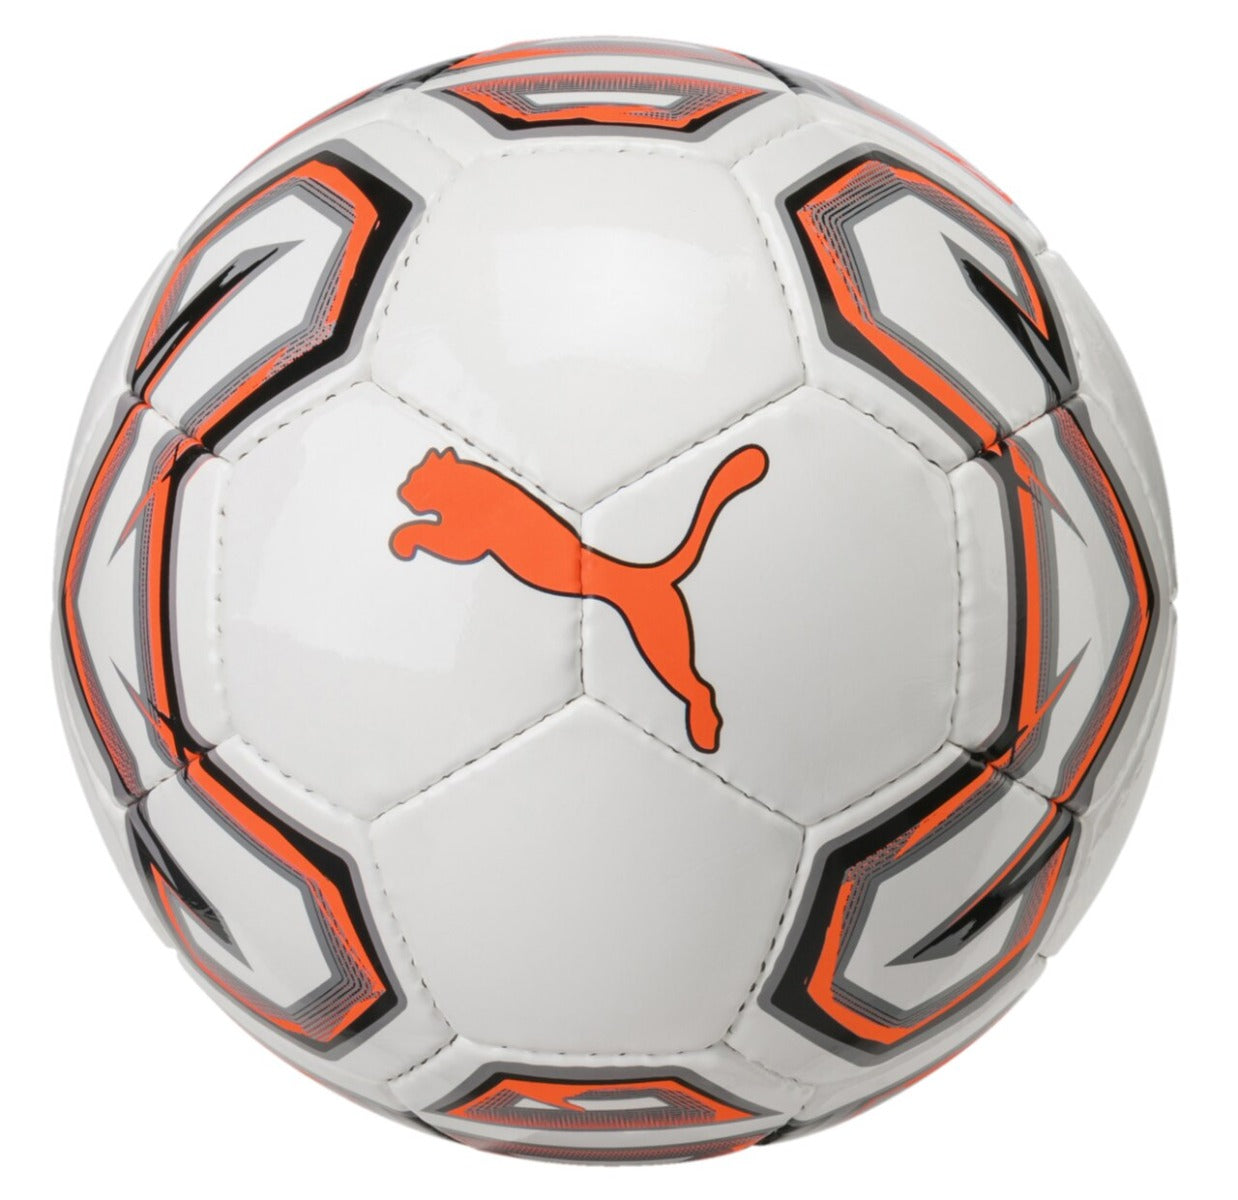 Puma Futsal 1 Trainer - Orange-Grey